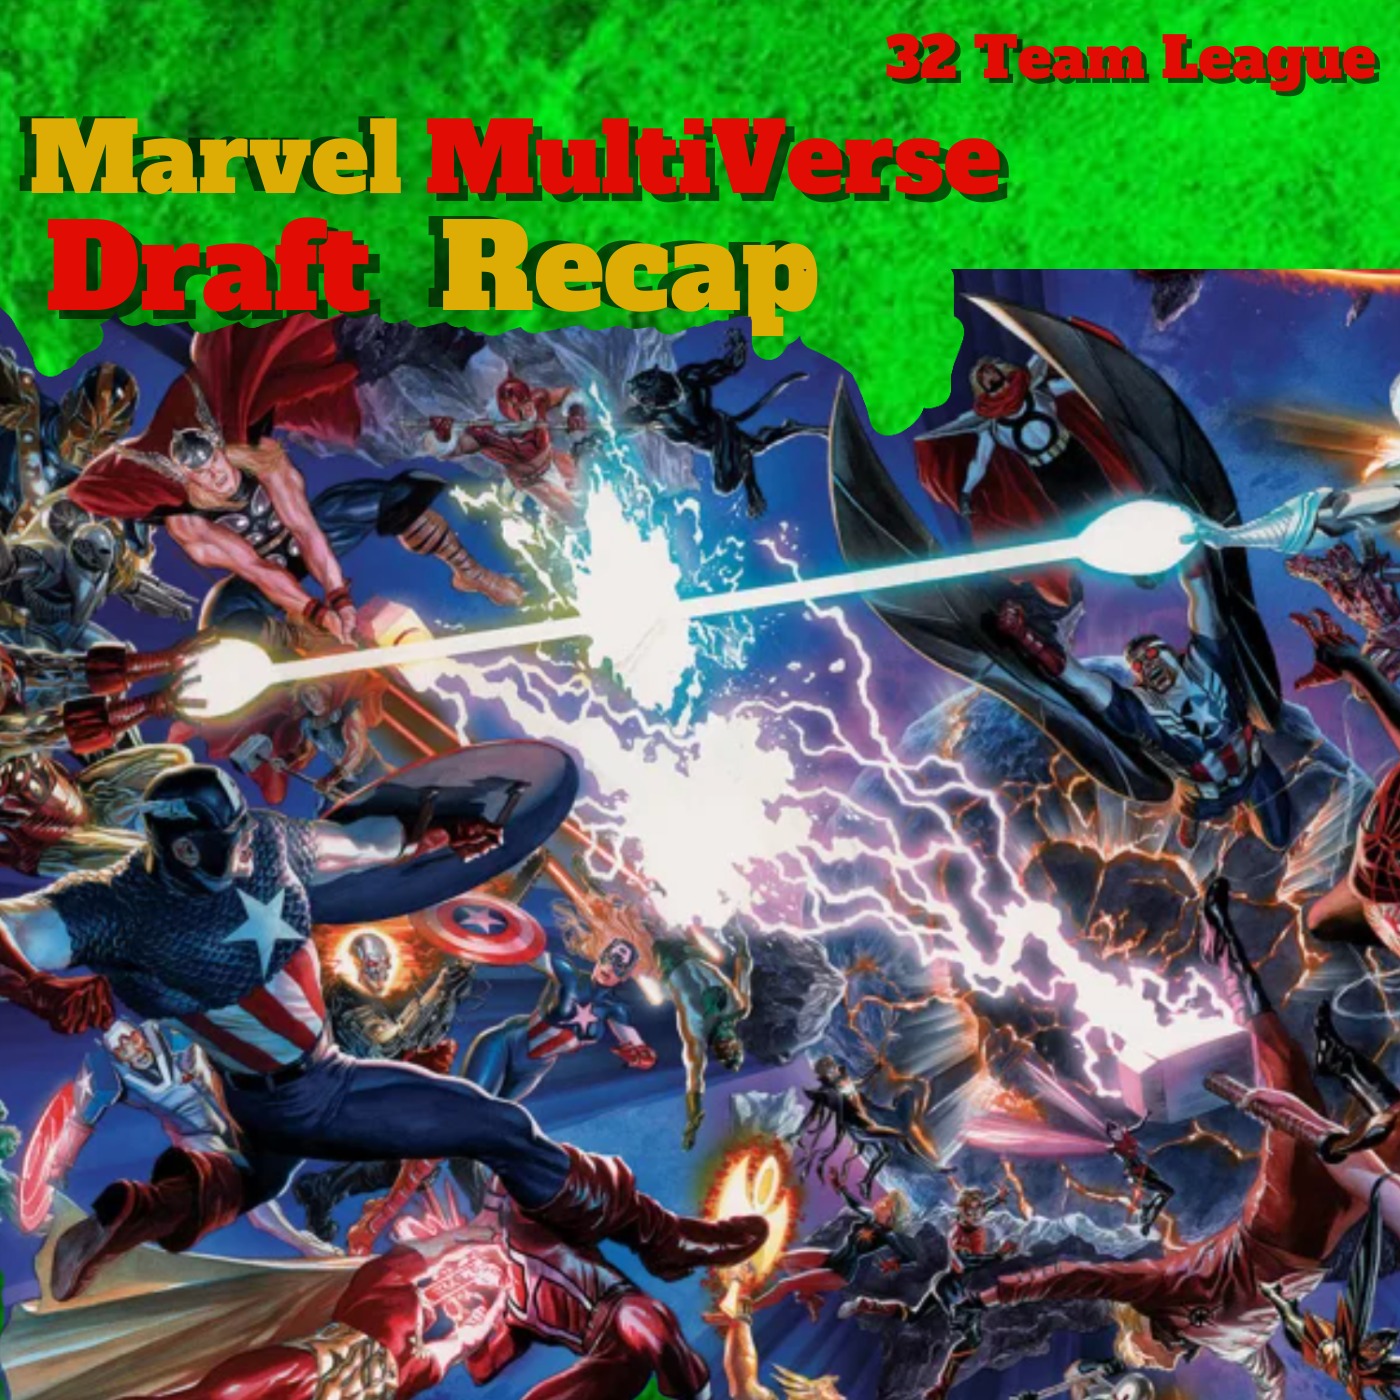 Marvel MultiVerse of Madness 32 Team League Draft Recap